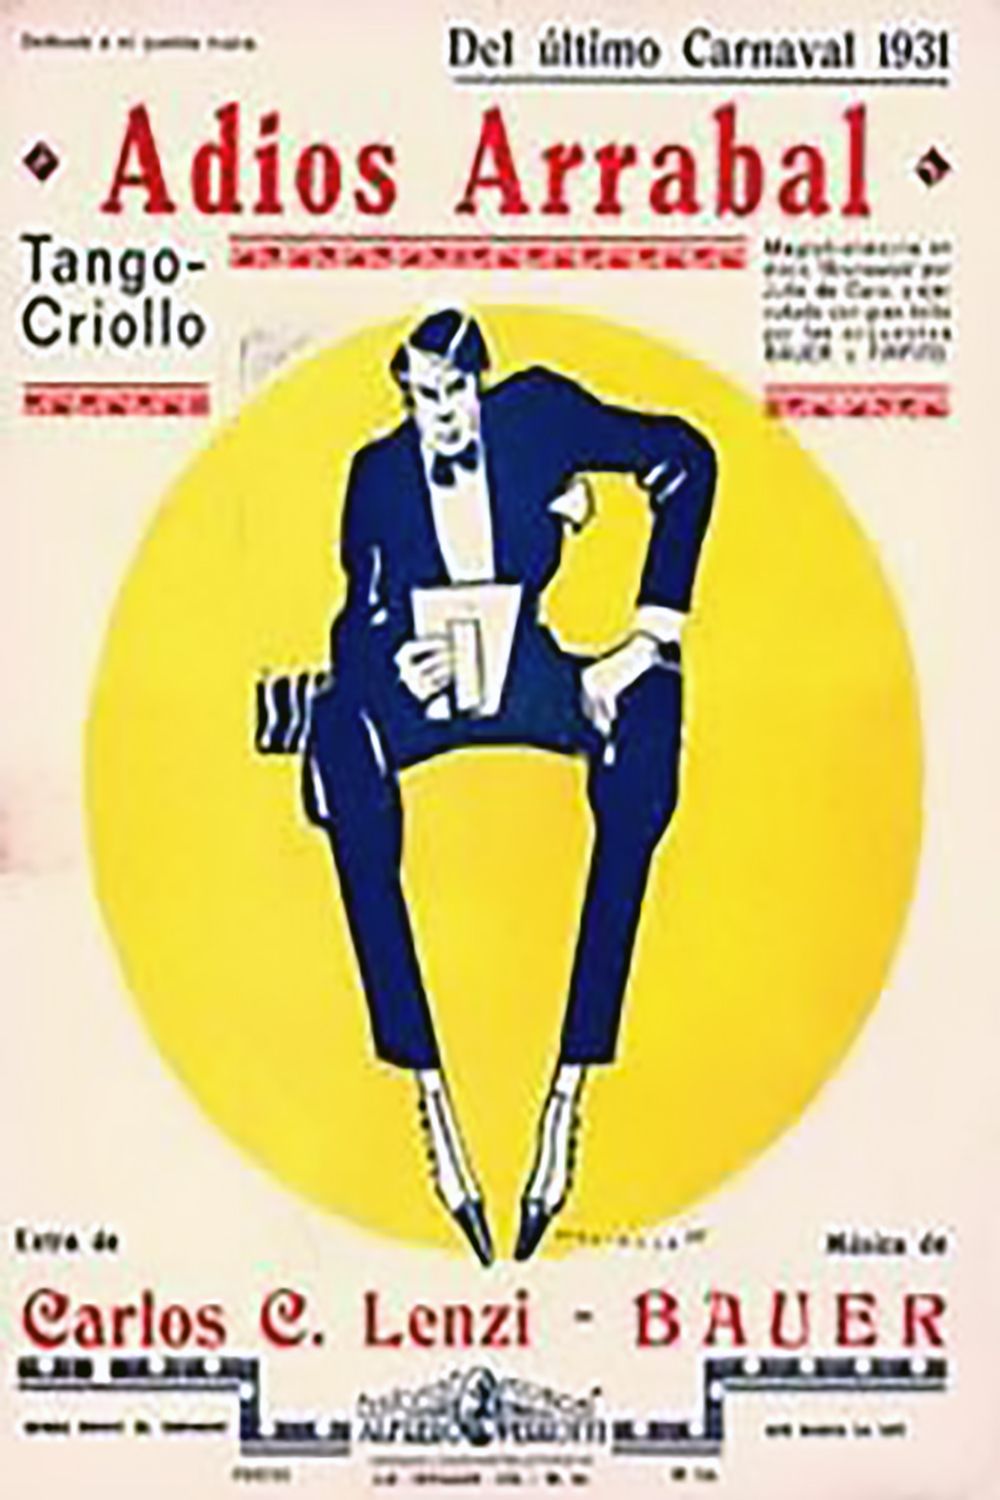 "Adios arrabal", Argentine Tango music sheet cover.